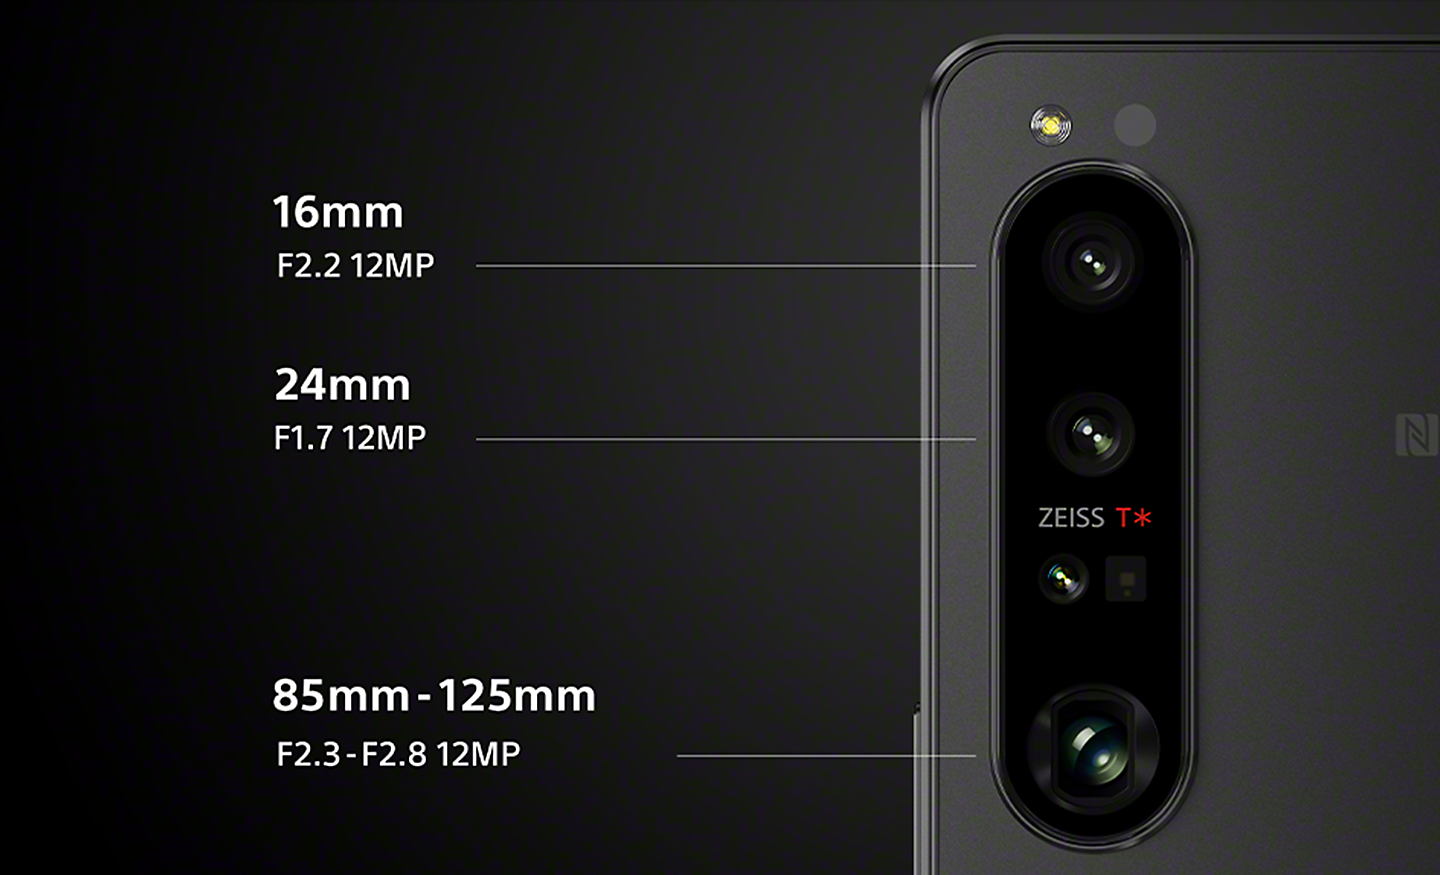 Xperia 1 IV 後置鏡頭的特寫，三款鏡頭分別以 16mm、24mm 及 85mm - 125mm 標記